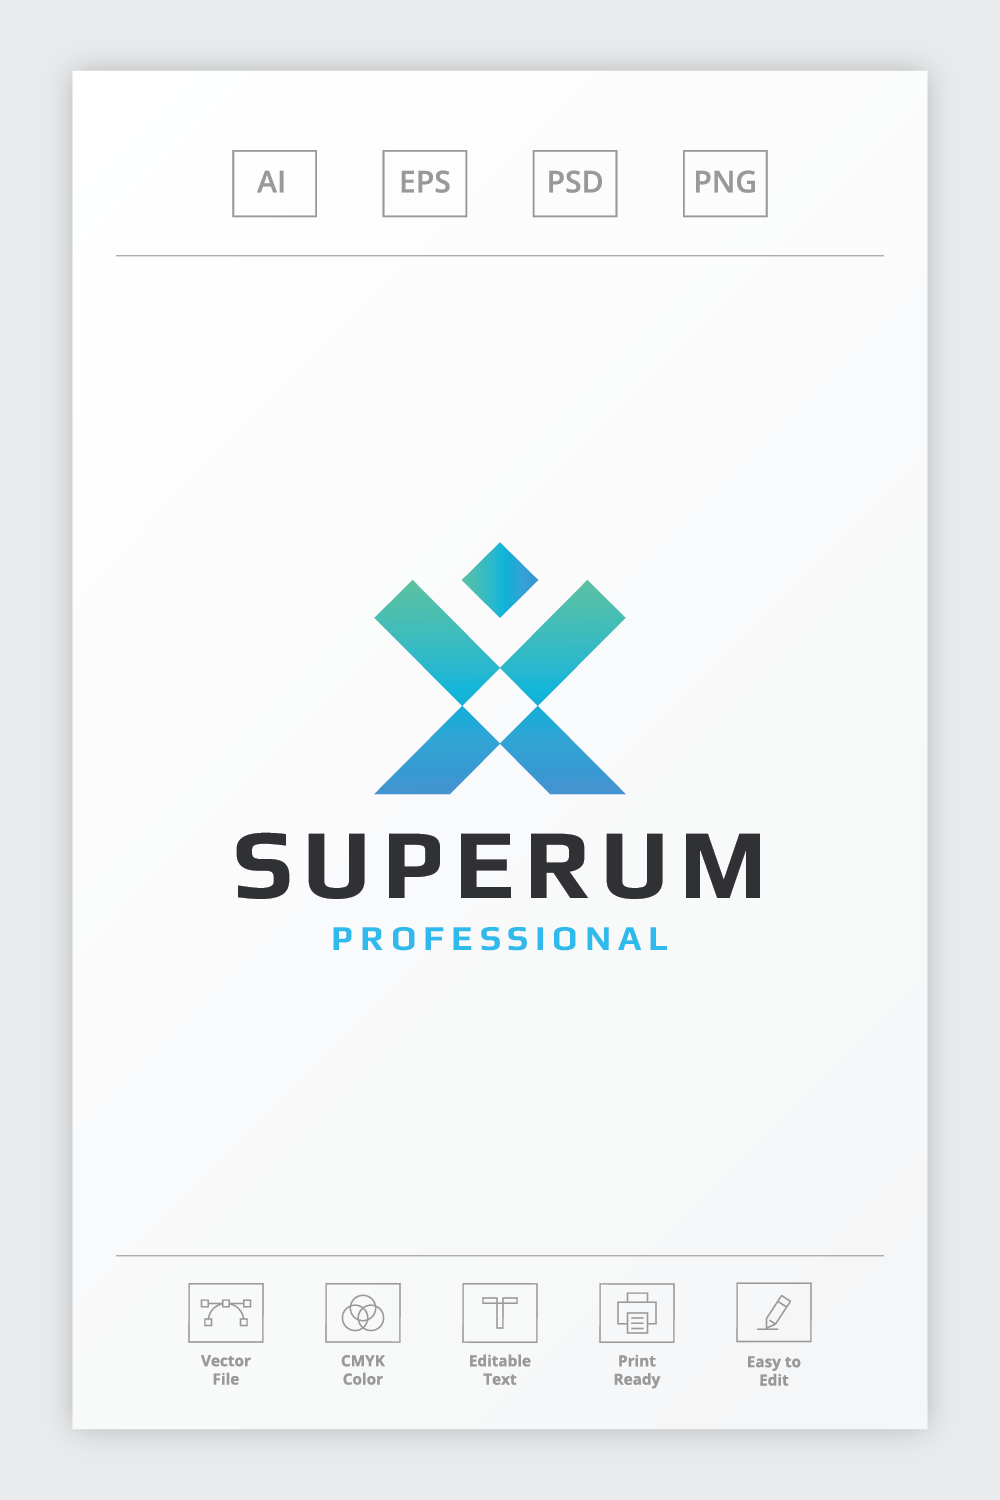 Super Human Professional Logo pinterest preview image.